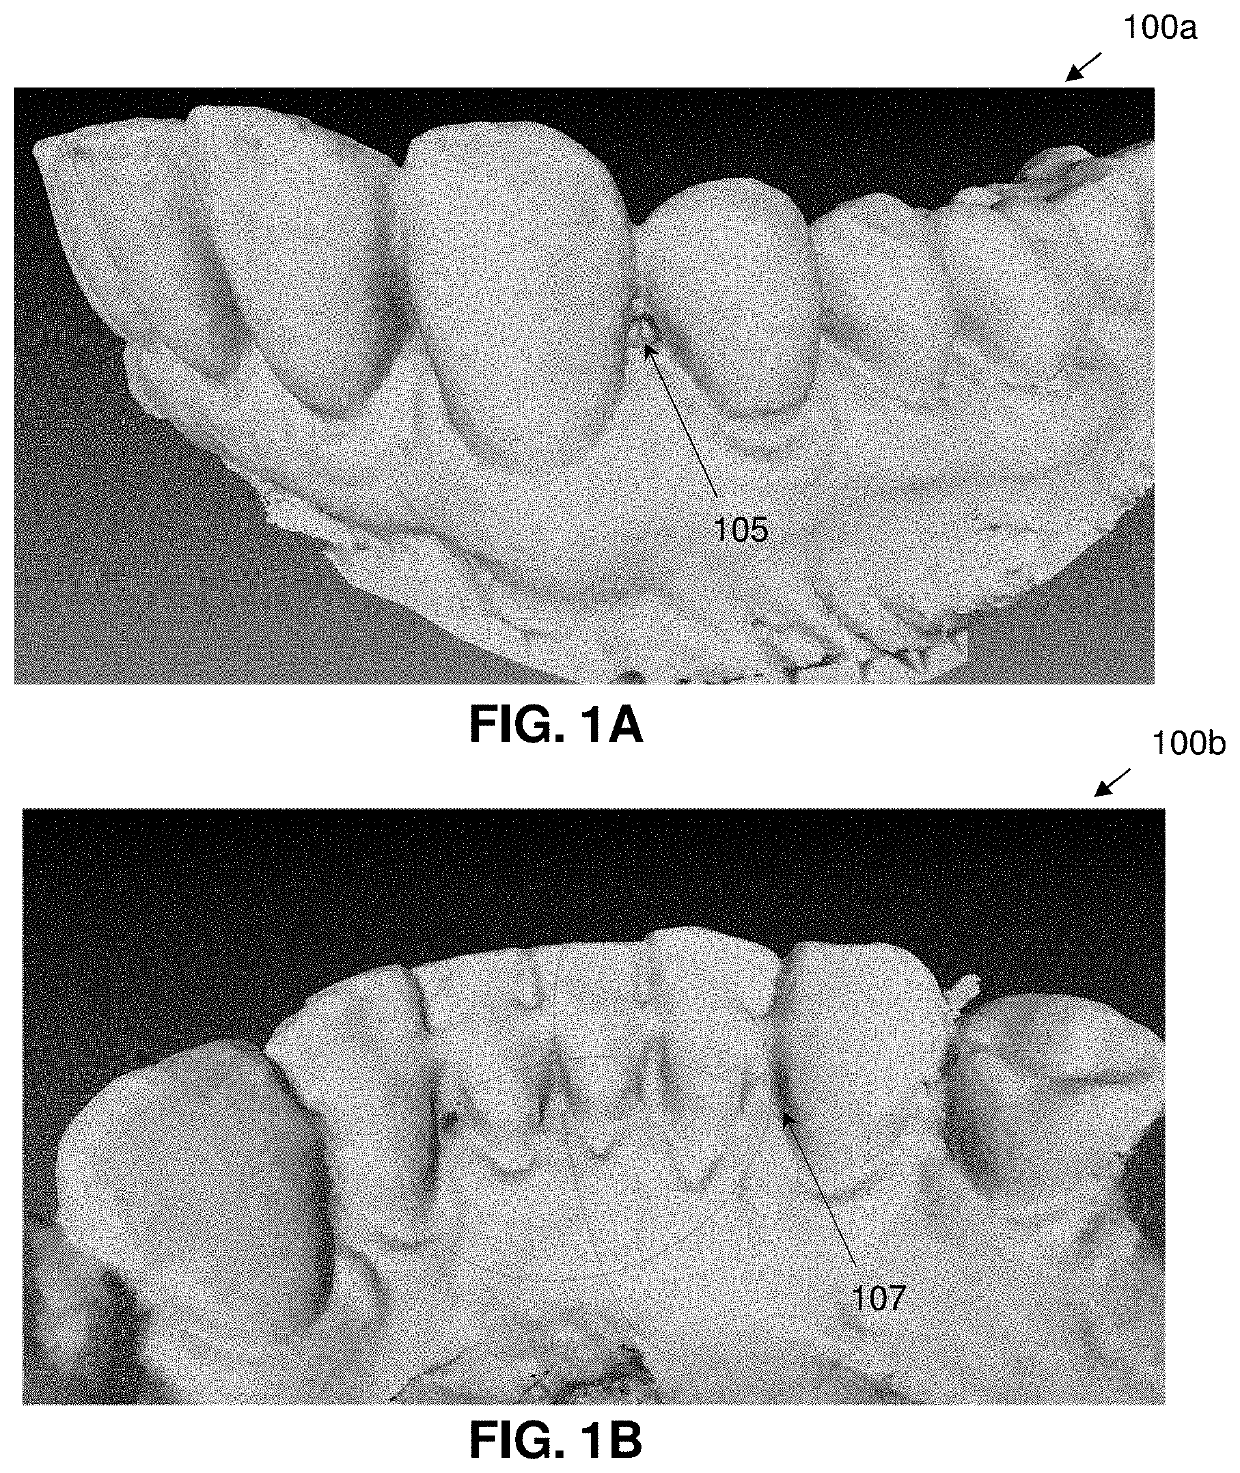 Apparatuses and methods for three-dimensional dental segmentation using dental image data